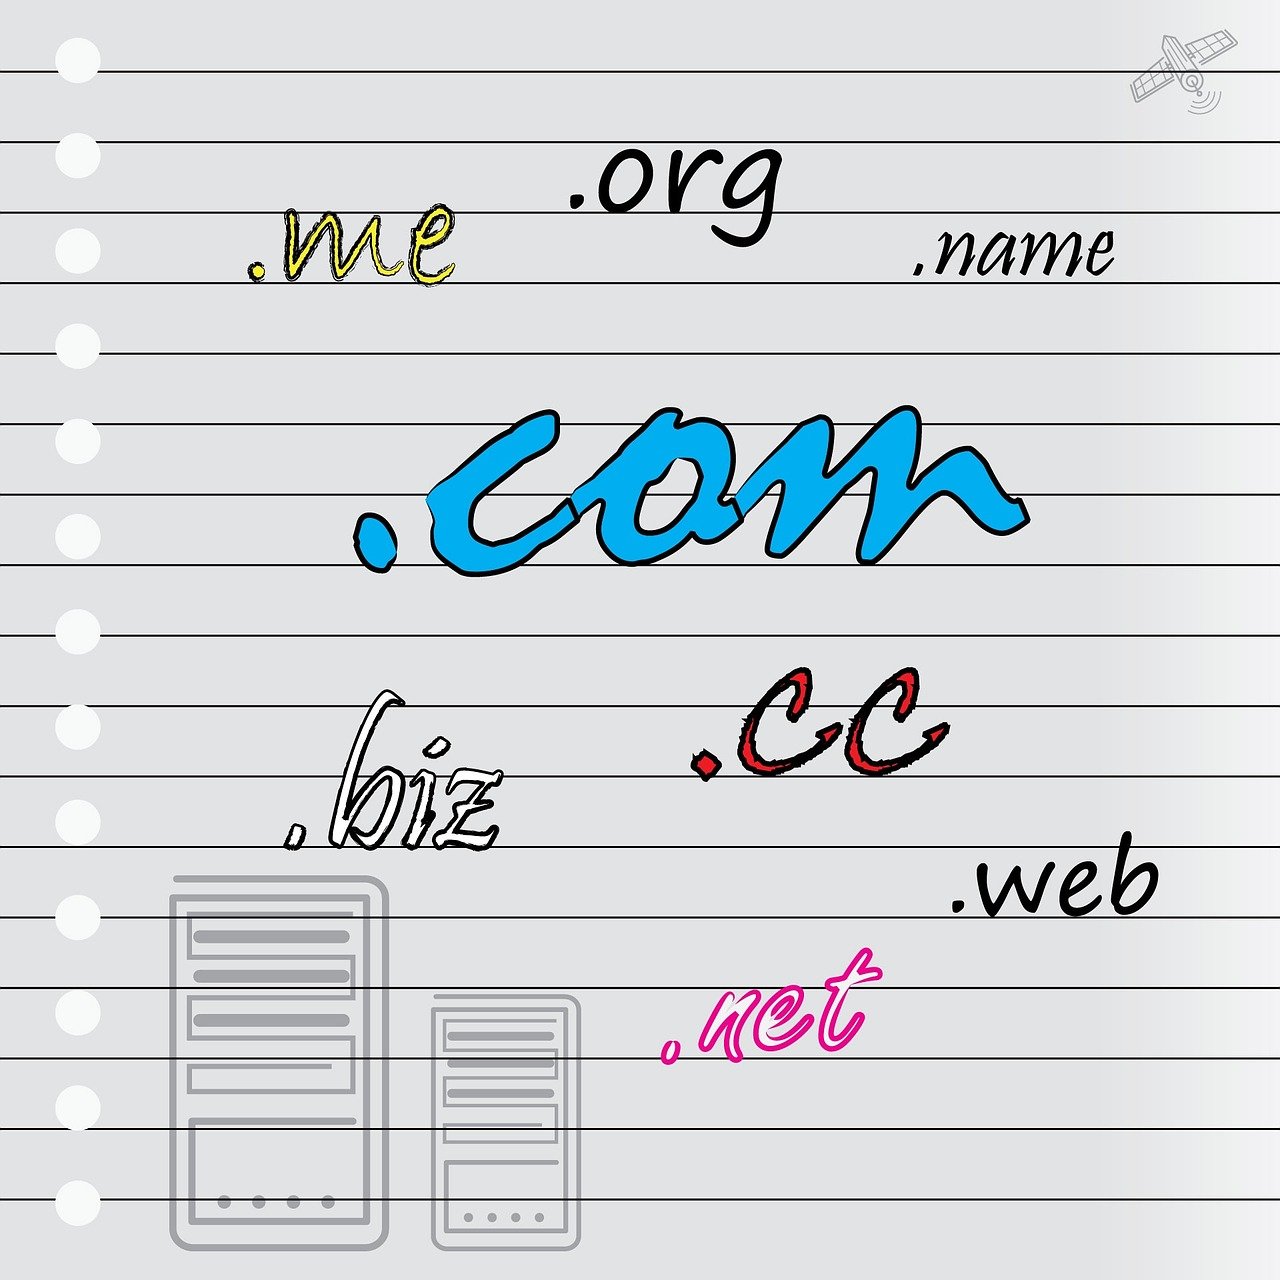 pixabay image for domain names